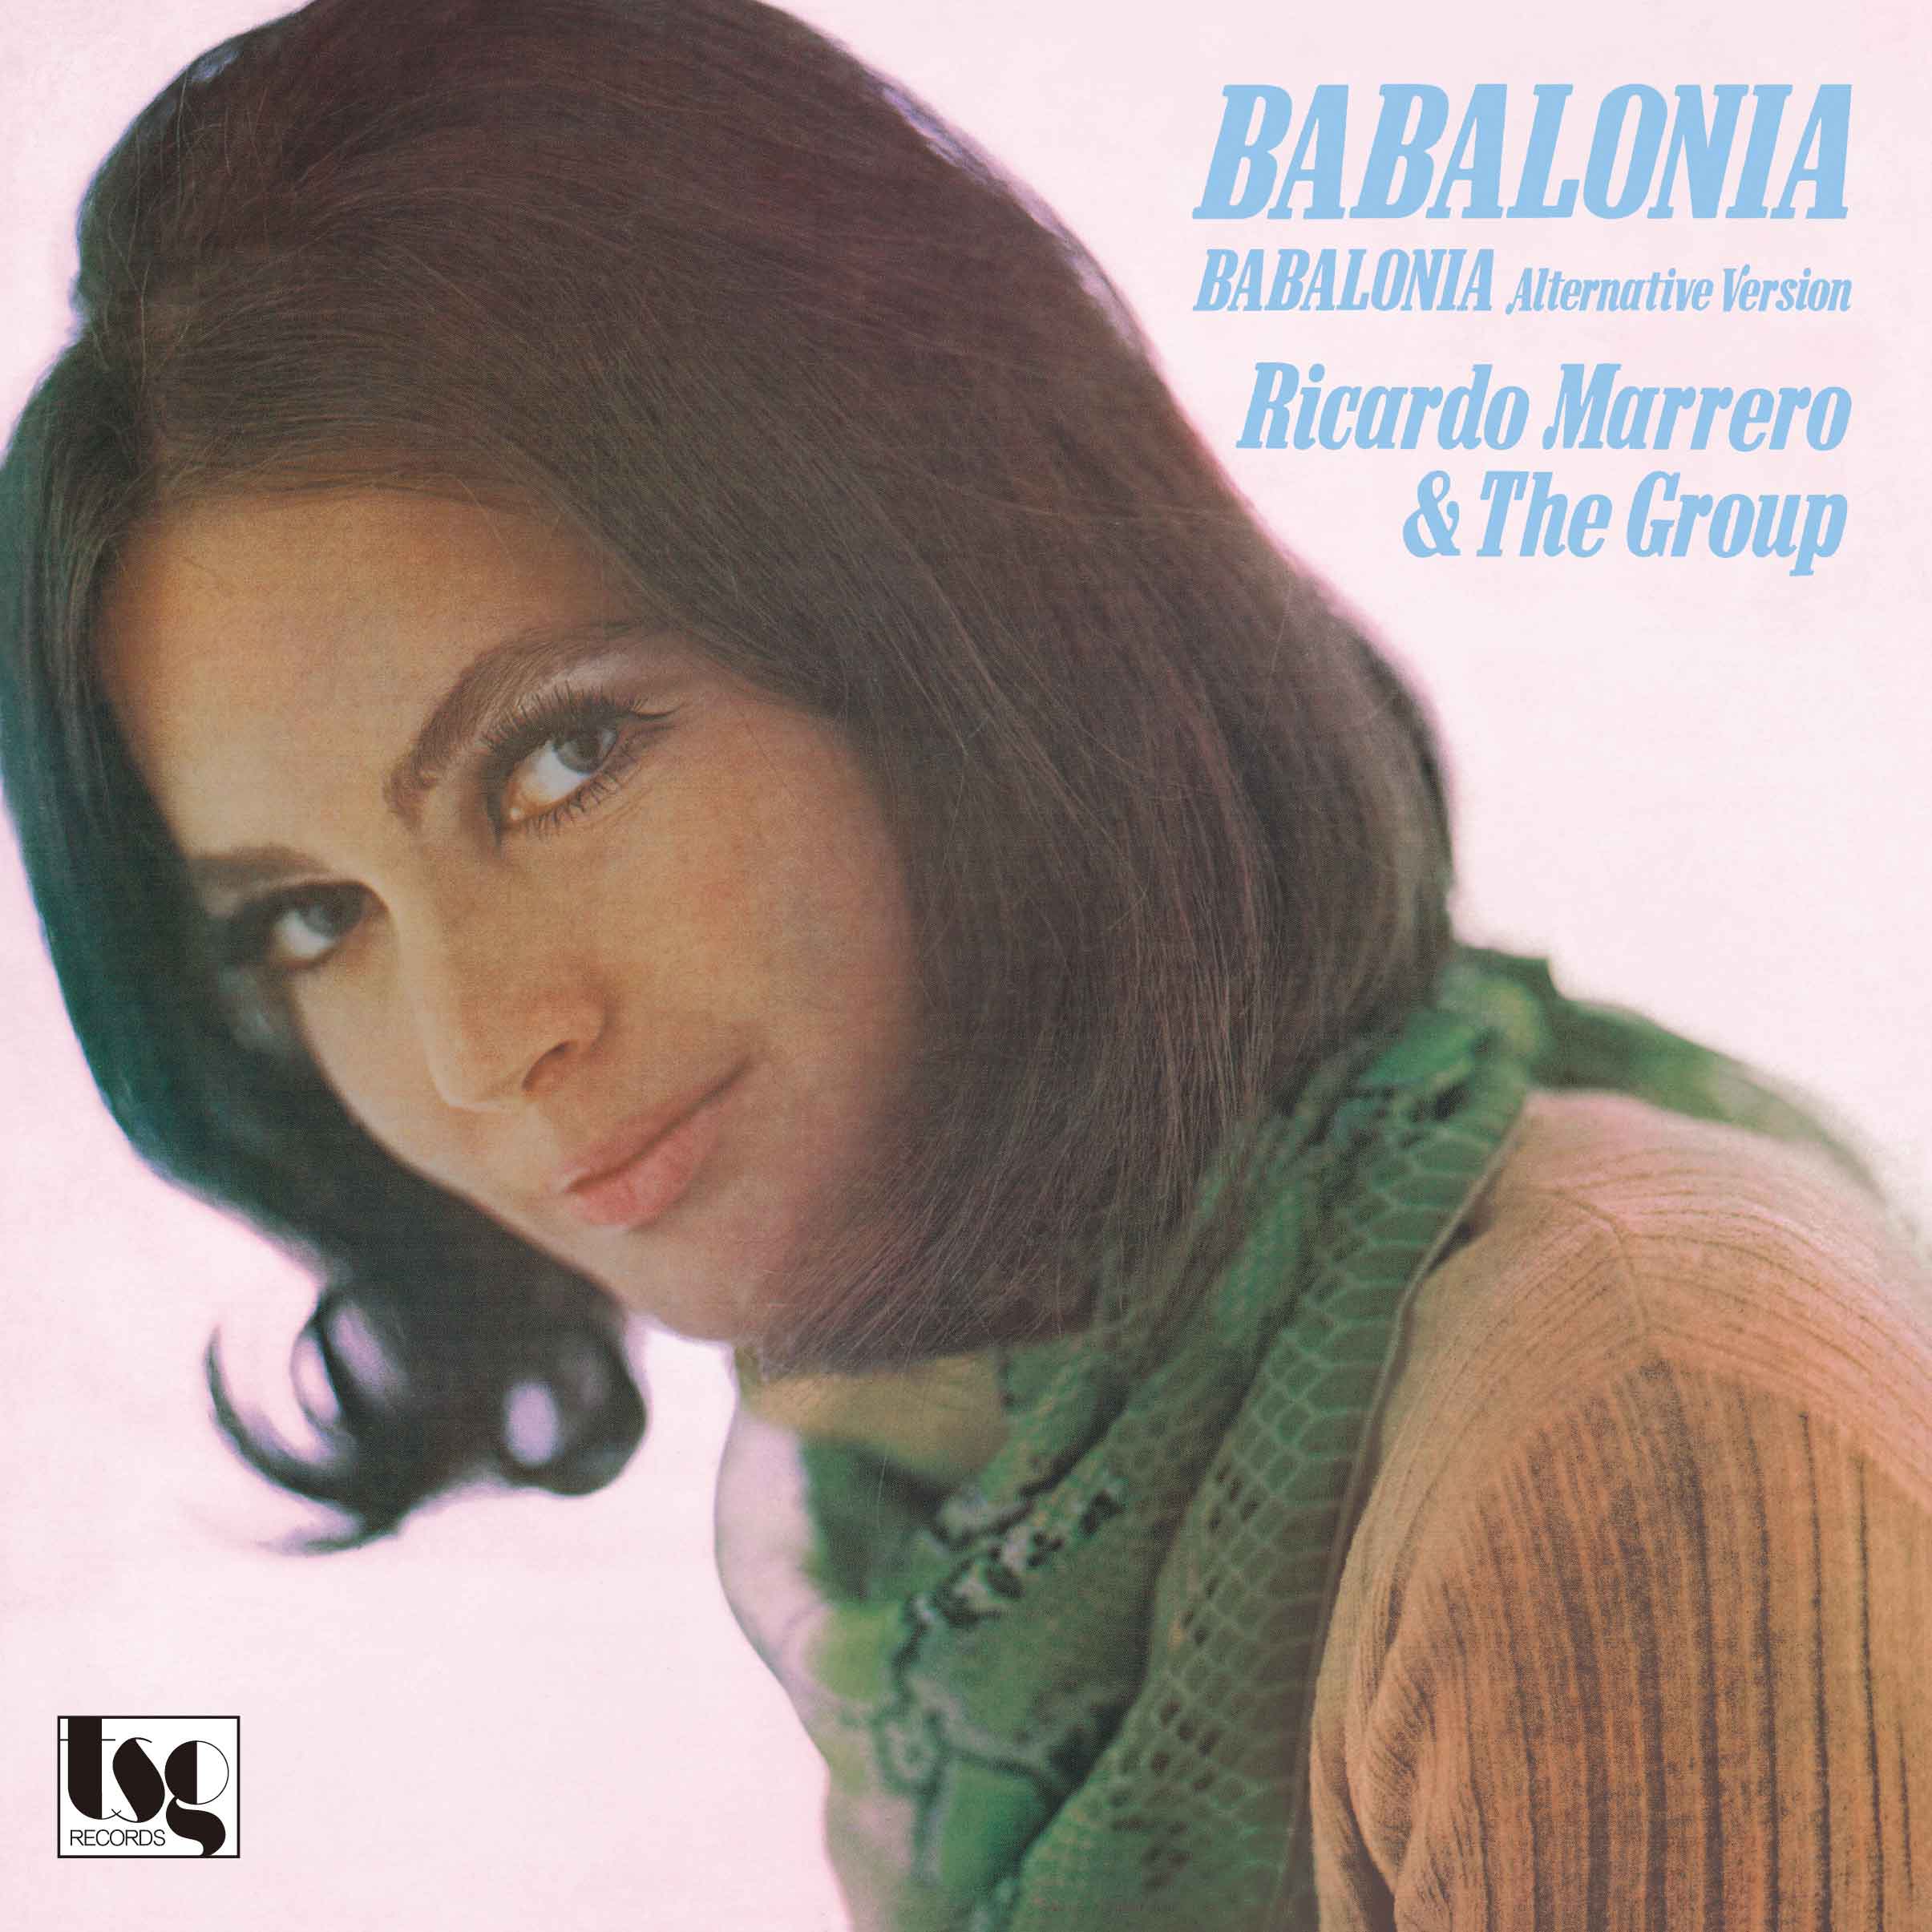 RICARDO MARRERO & THE GROUP「Babalonia / Babalonia(Alternative Version)」